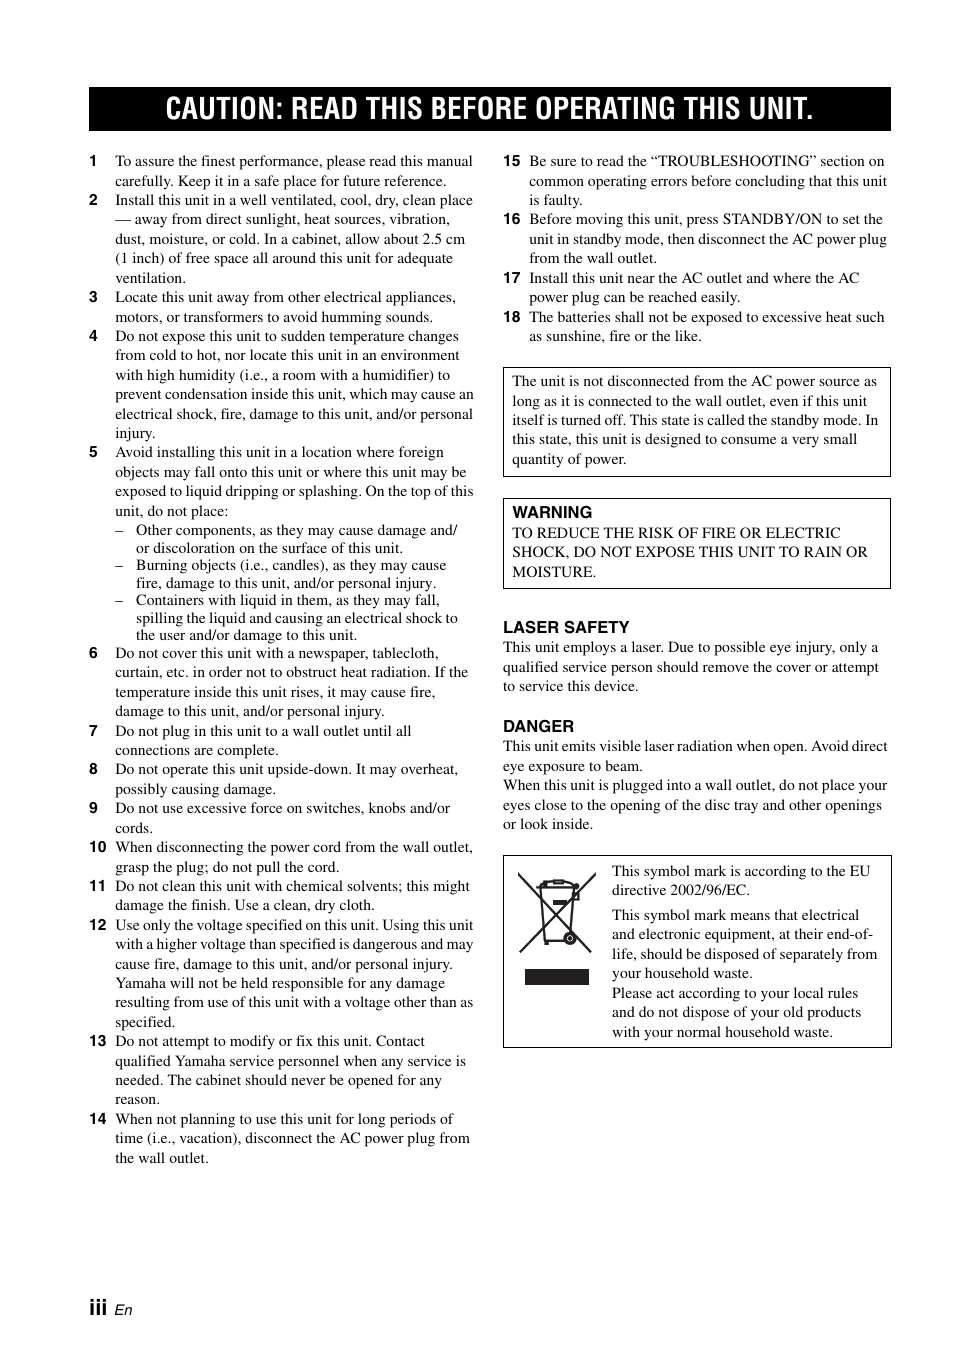 English, Caution: read this before operating this unit | Инструкция по эксплуатации Yamaha DVD-S1800 | Страница 4 / 94